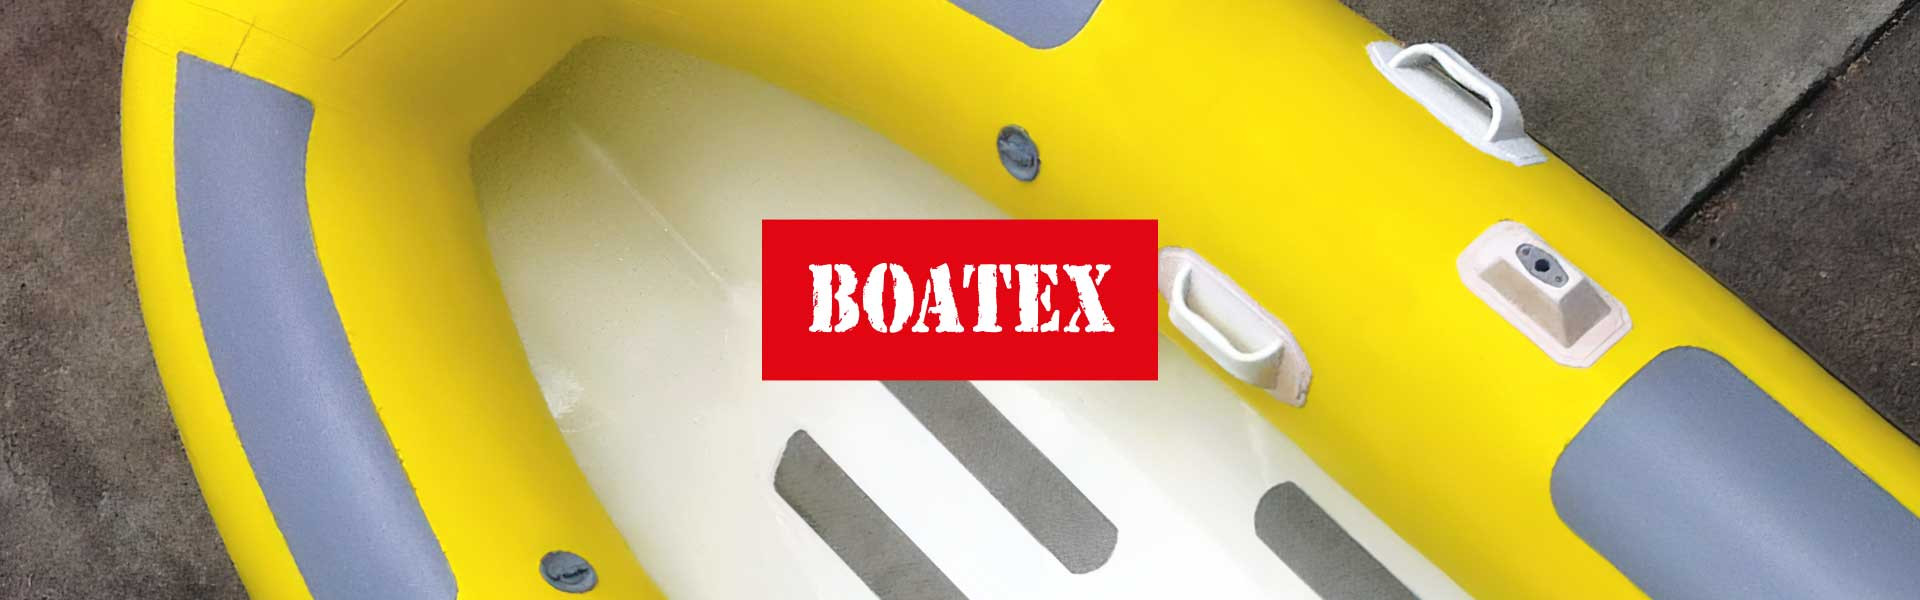 BOATEX 1100 г/м.кв желтого цвета – 7,12 $ за м.кв